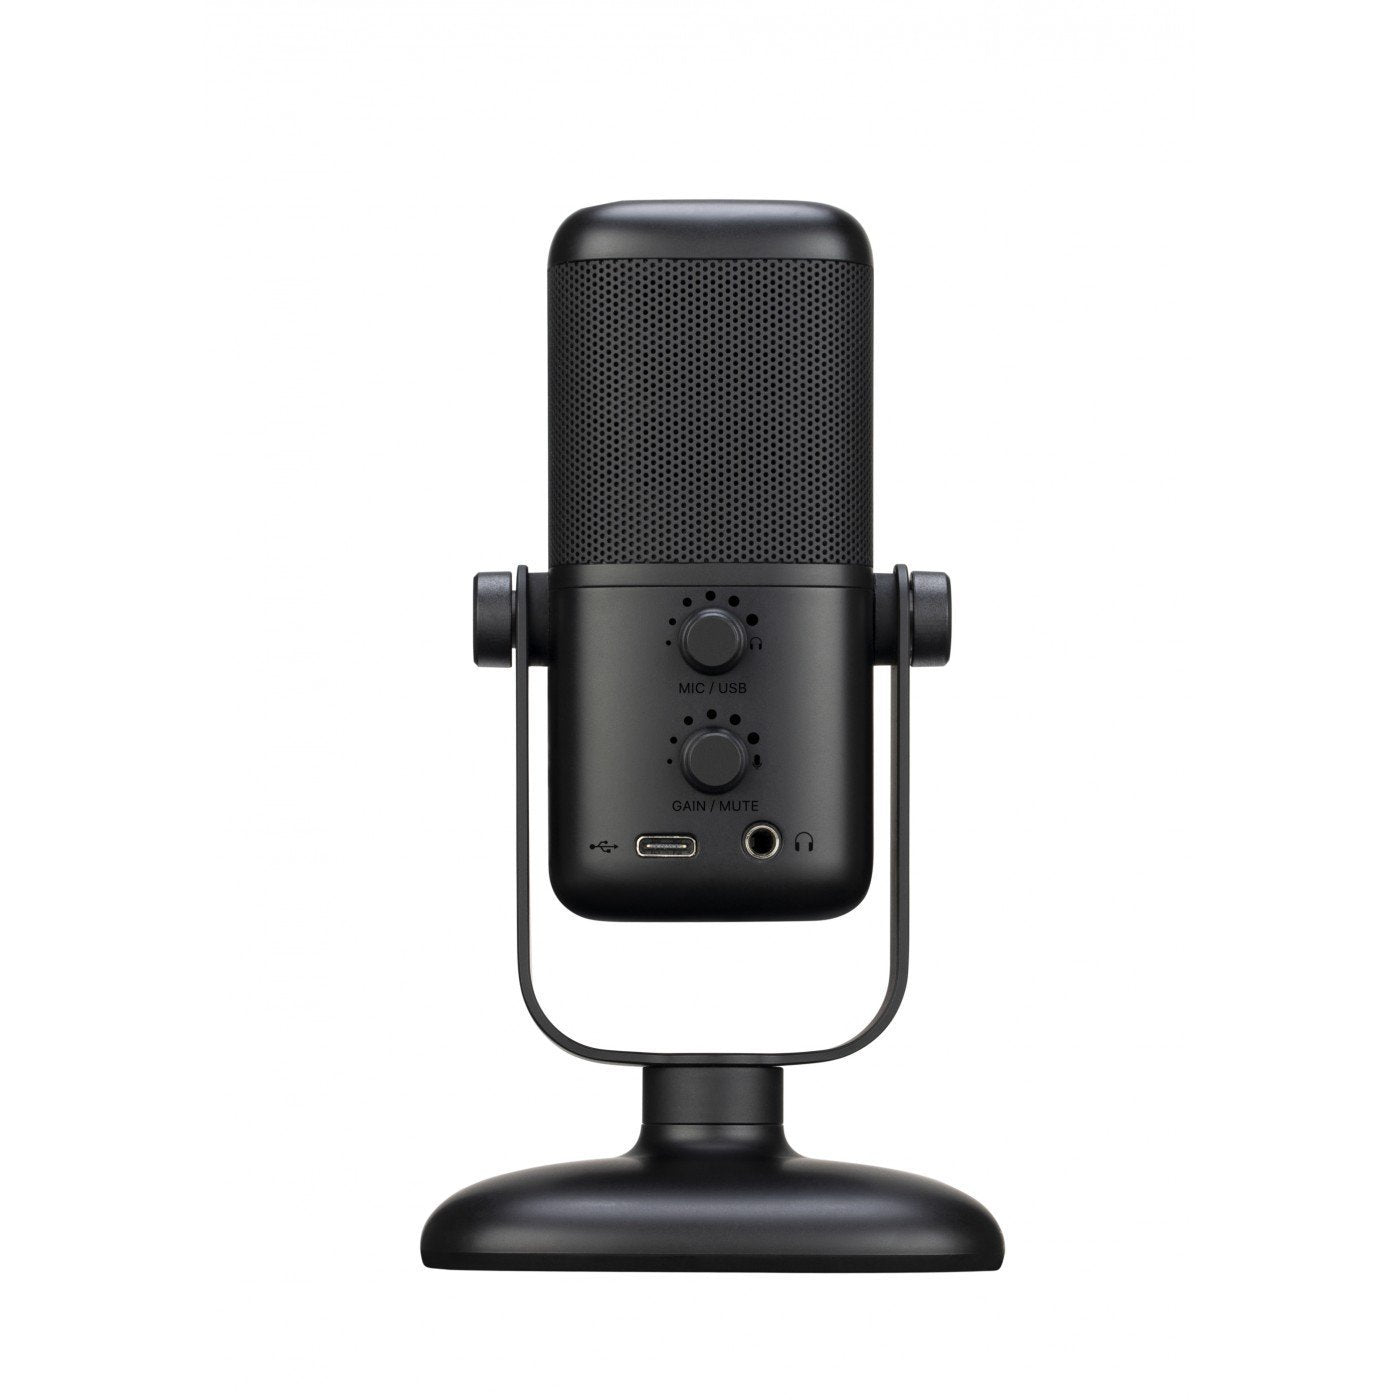 Saramonic SR-MV2000 USB mic for podcasting